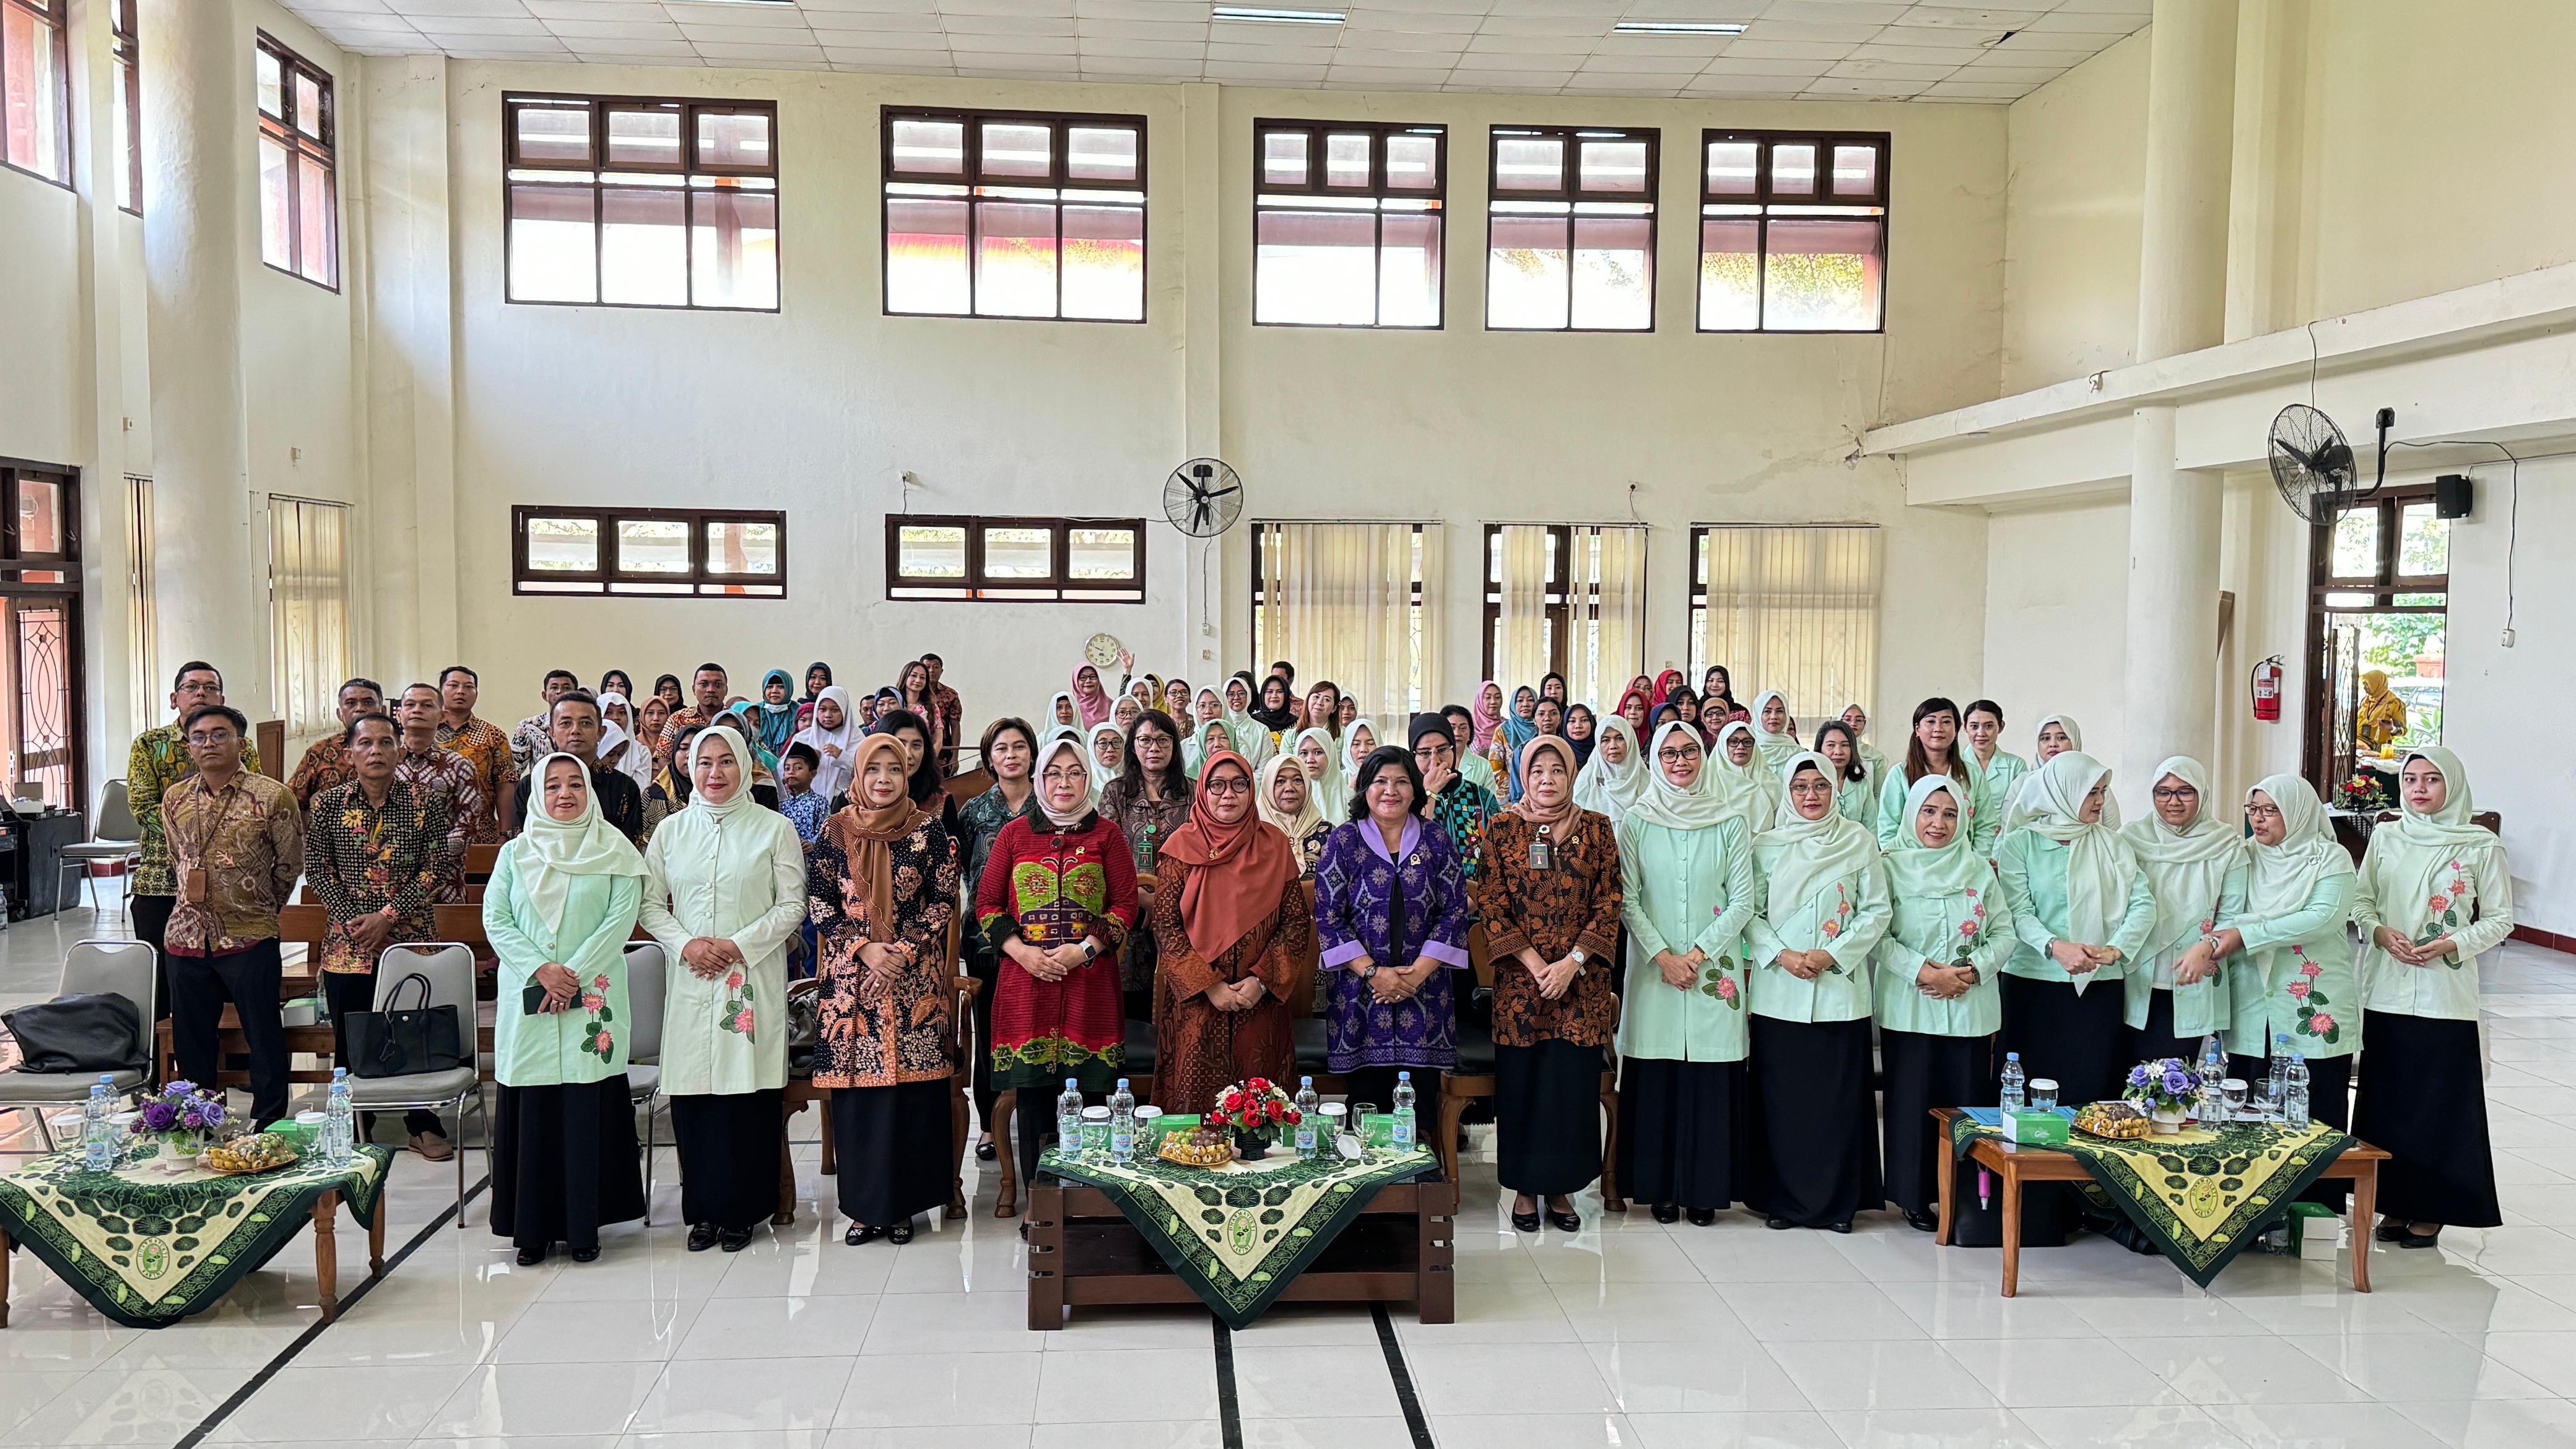 Penyerahan Bantuan Dana Beasiswa Dharmayukti Karini Cabang Yogyakarta